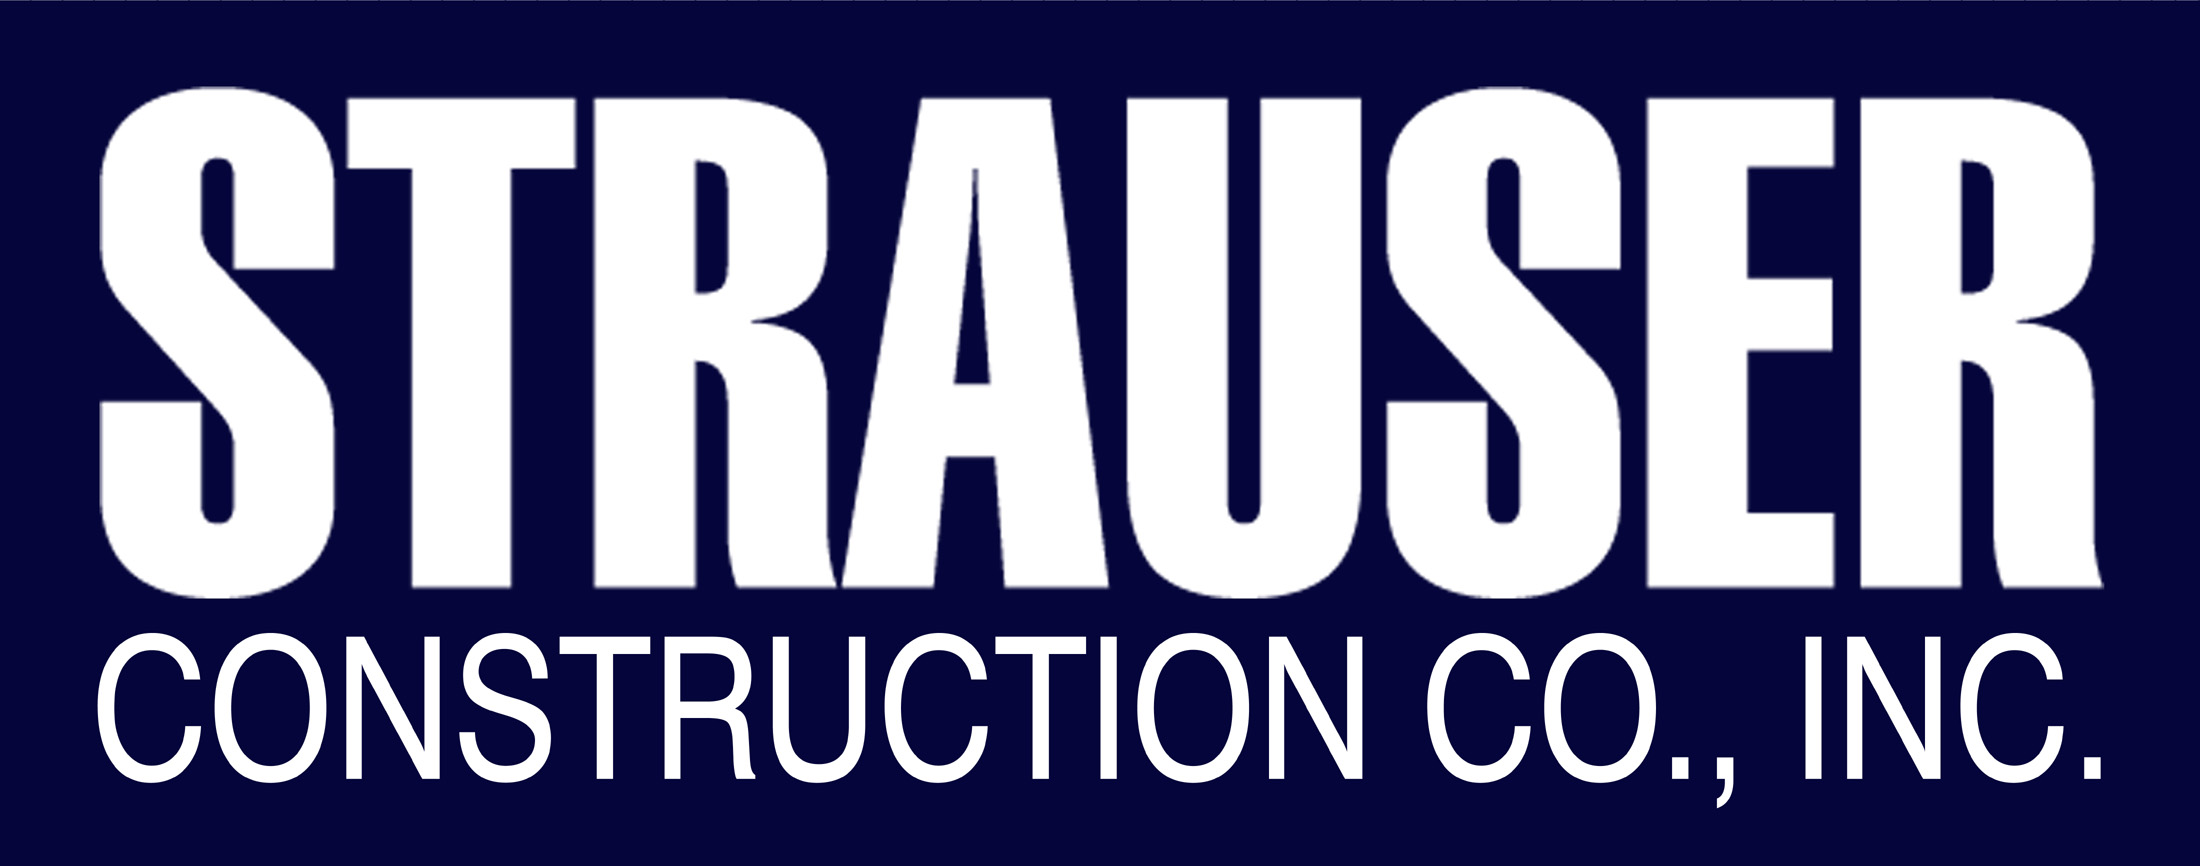 Strauser Construction